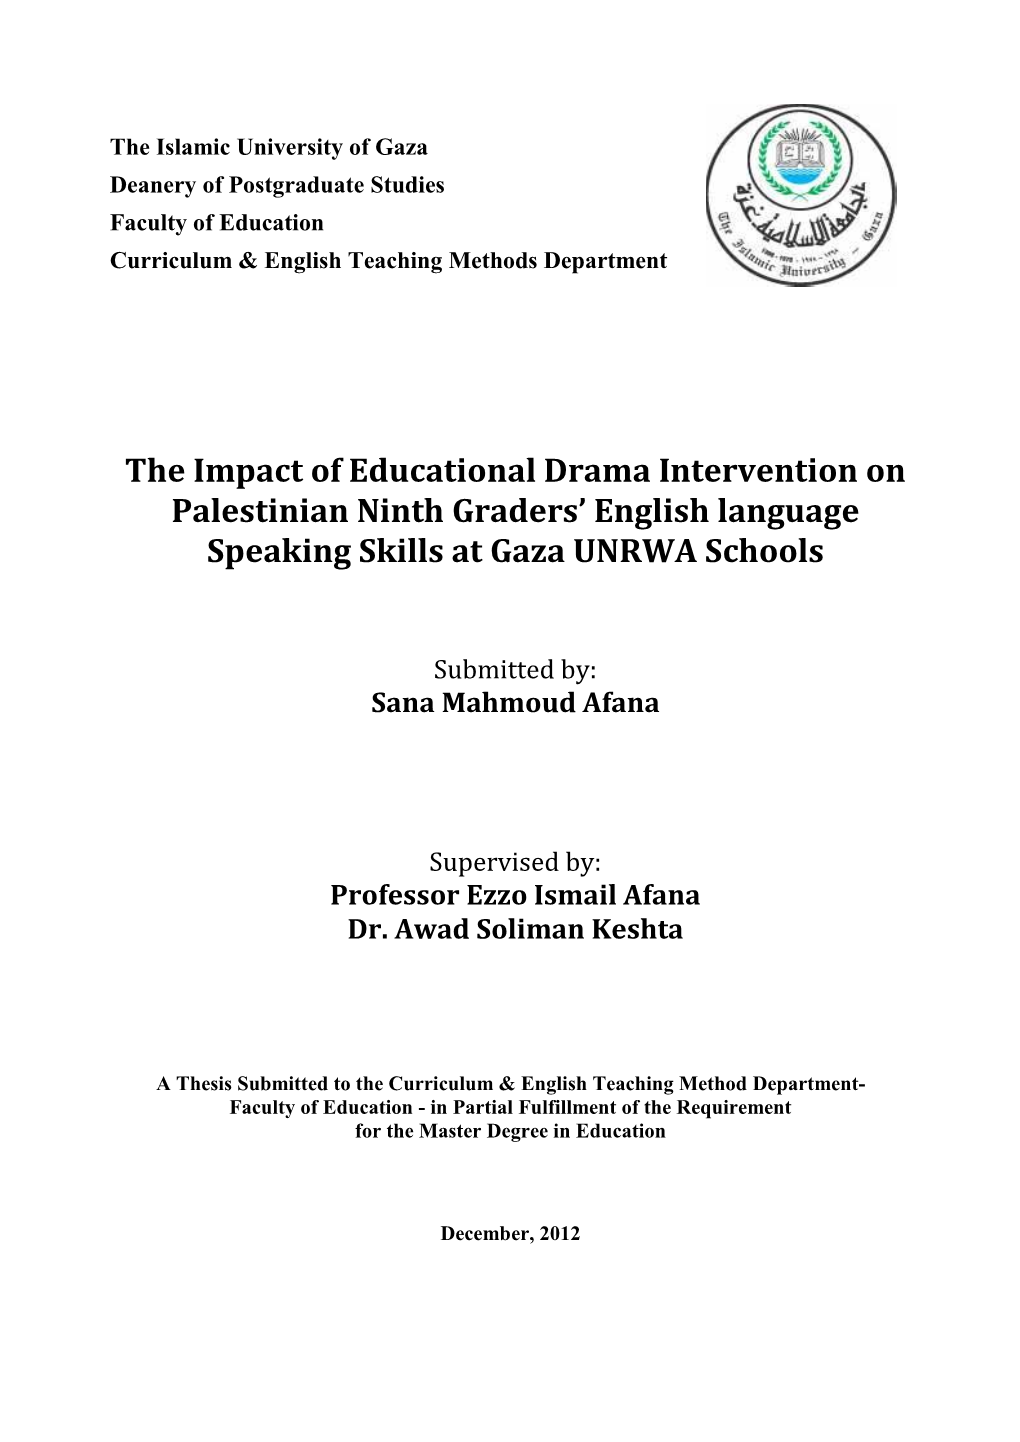 The Impact of Educational Drama Intervention on Palestinian Ninth Graders’ English Language Speaking Skills at Gaza UNRWA Schools